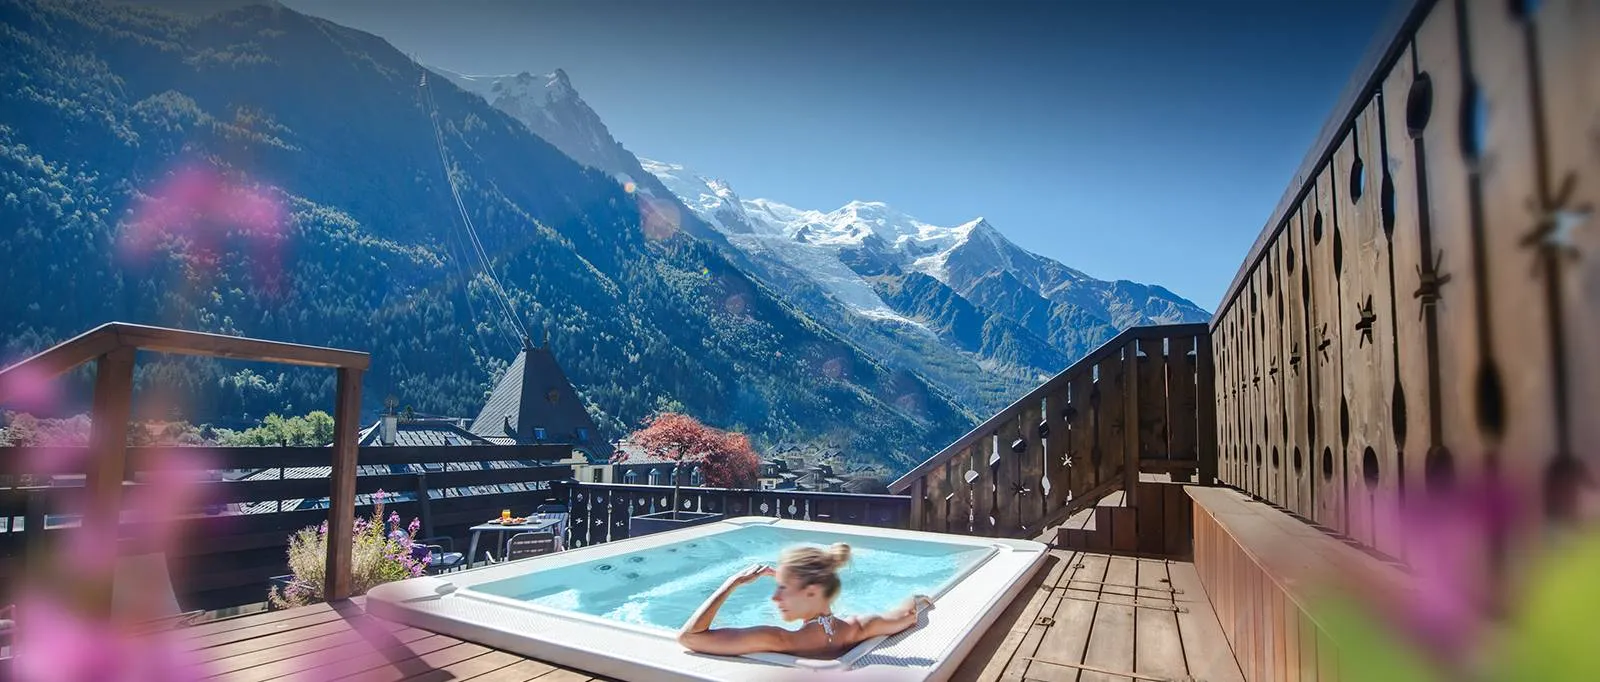 park-hotel-suisse-spa